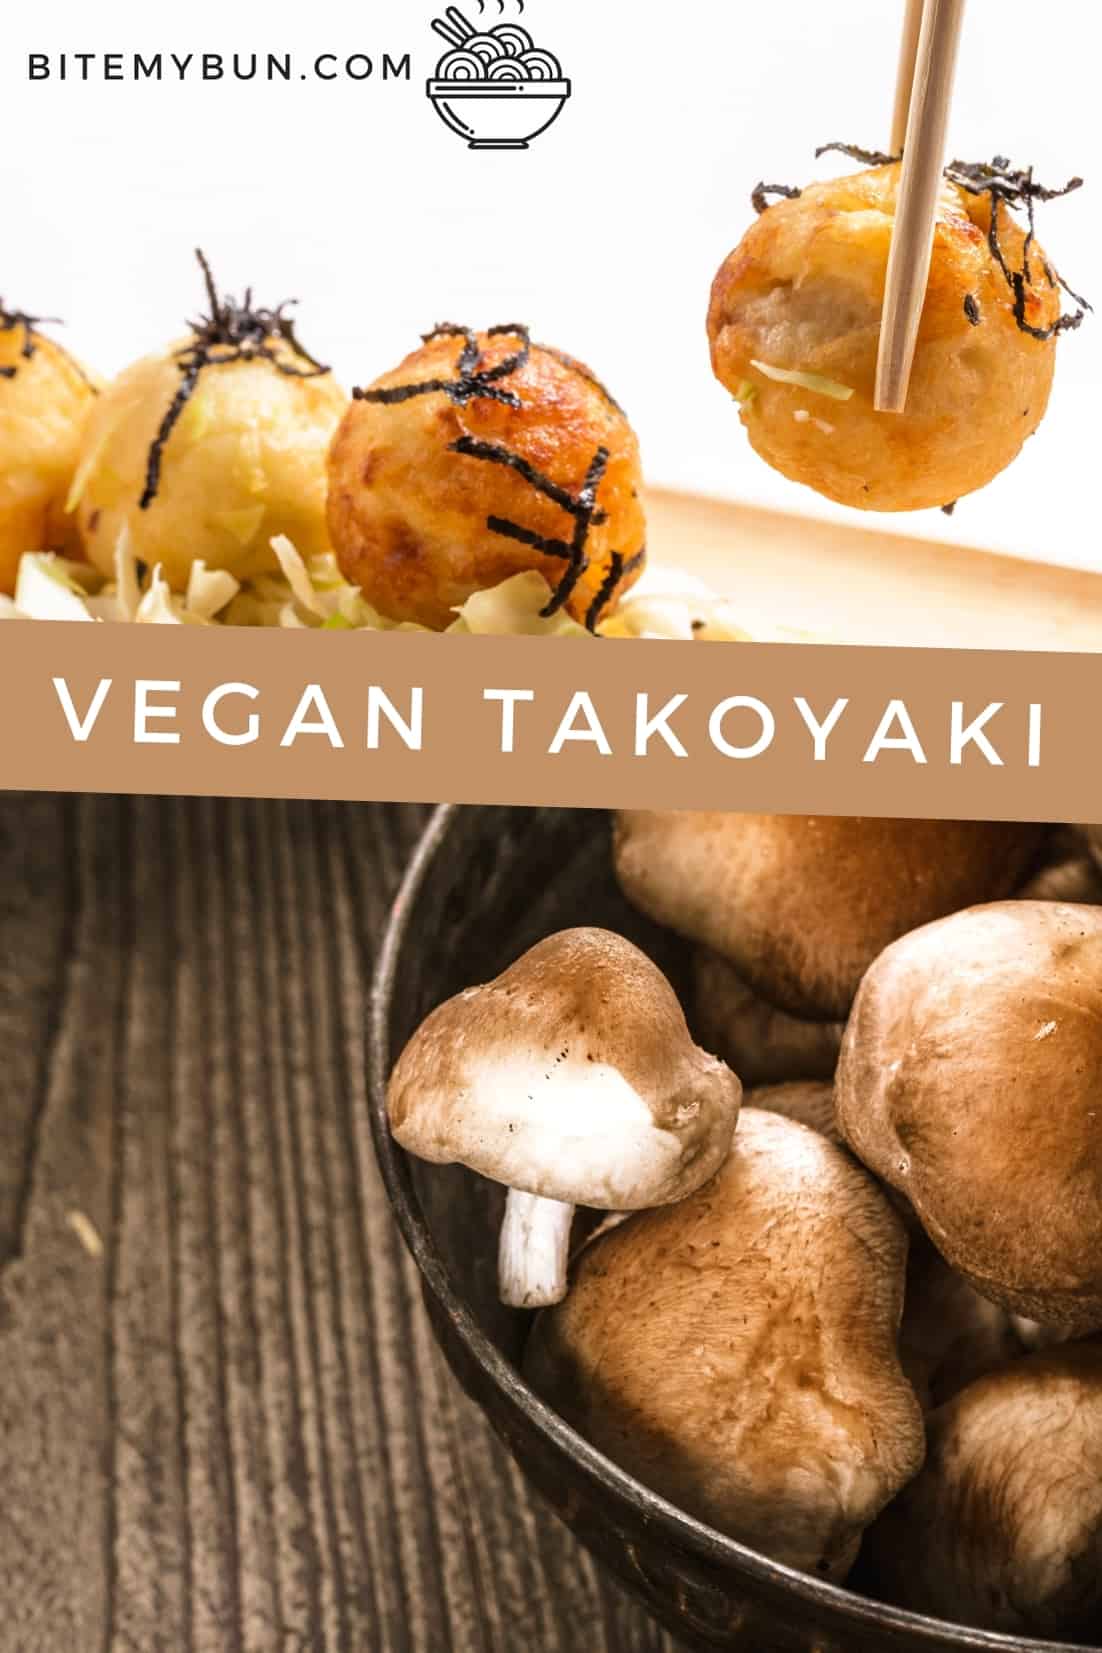 Vegan takoyaki with shiitake